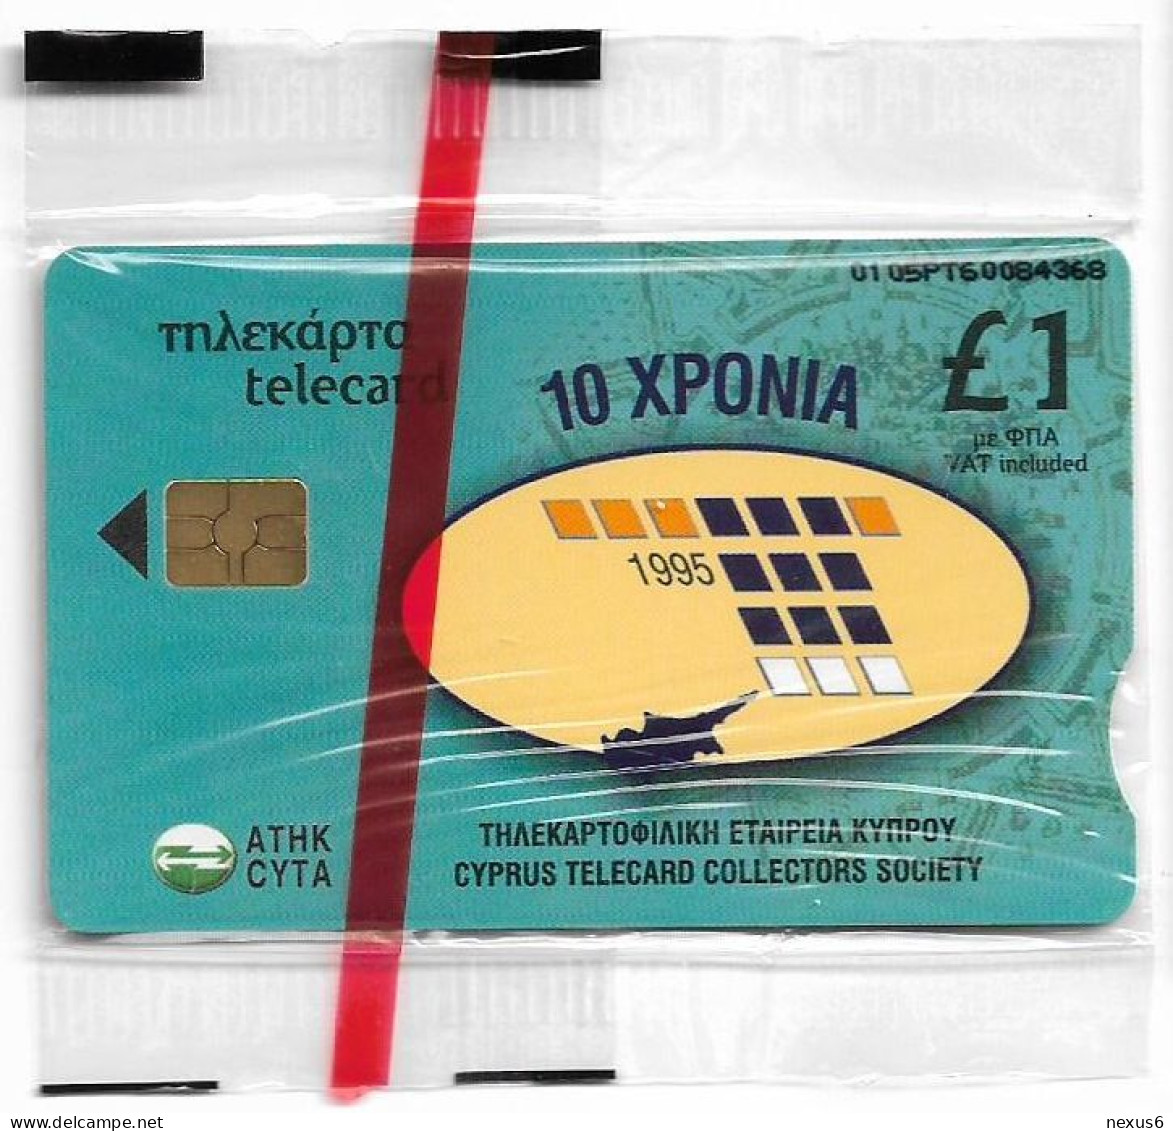 Cyprus - Cyta (Chip) - 10 Years Cyprus Telecard Collector's Society - 0105PT - 03.2005, 2.000ex, NSB - Cyprus